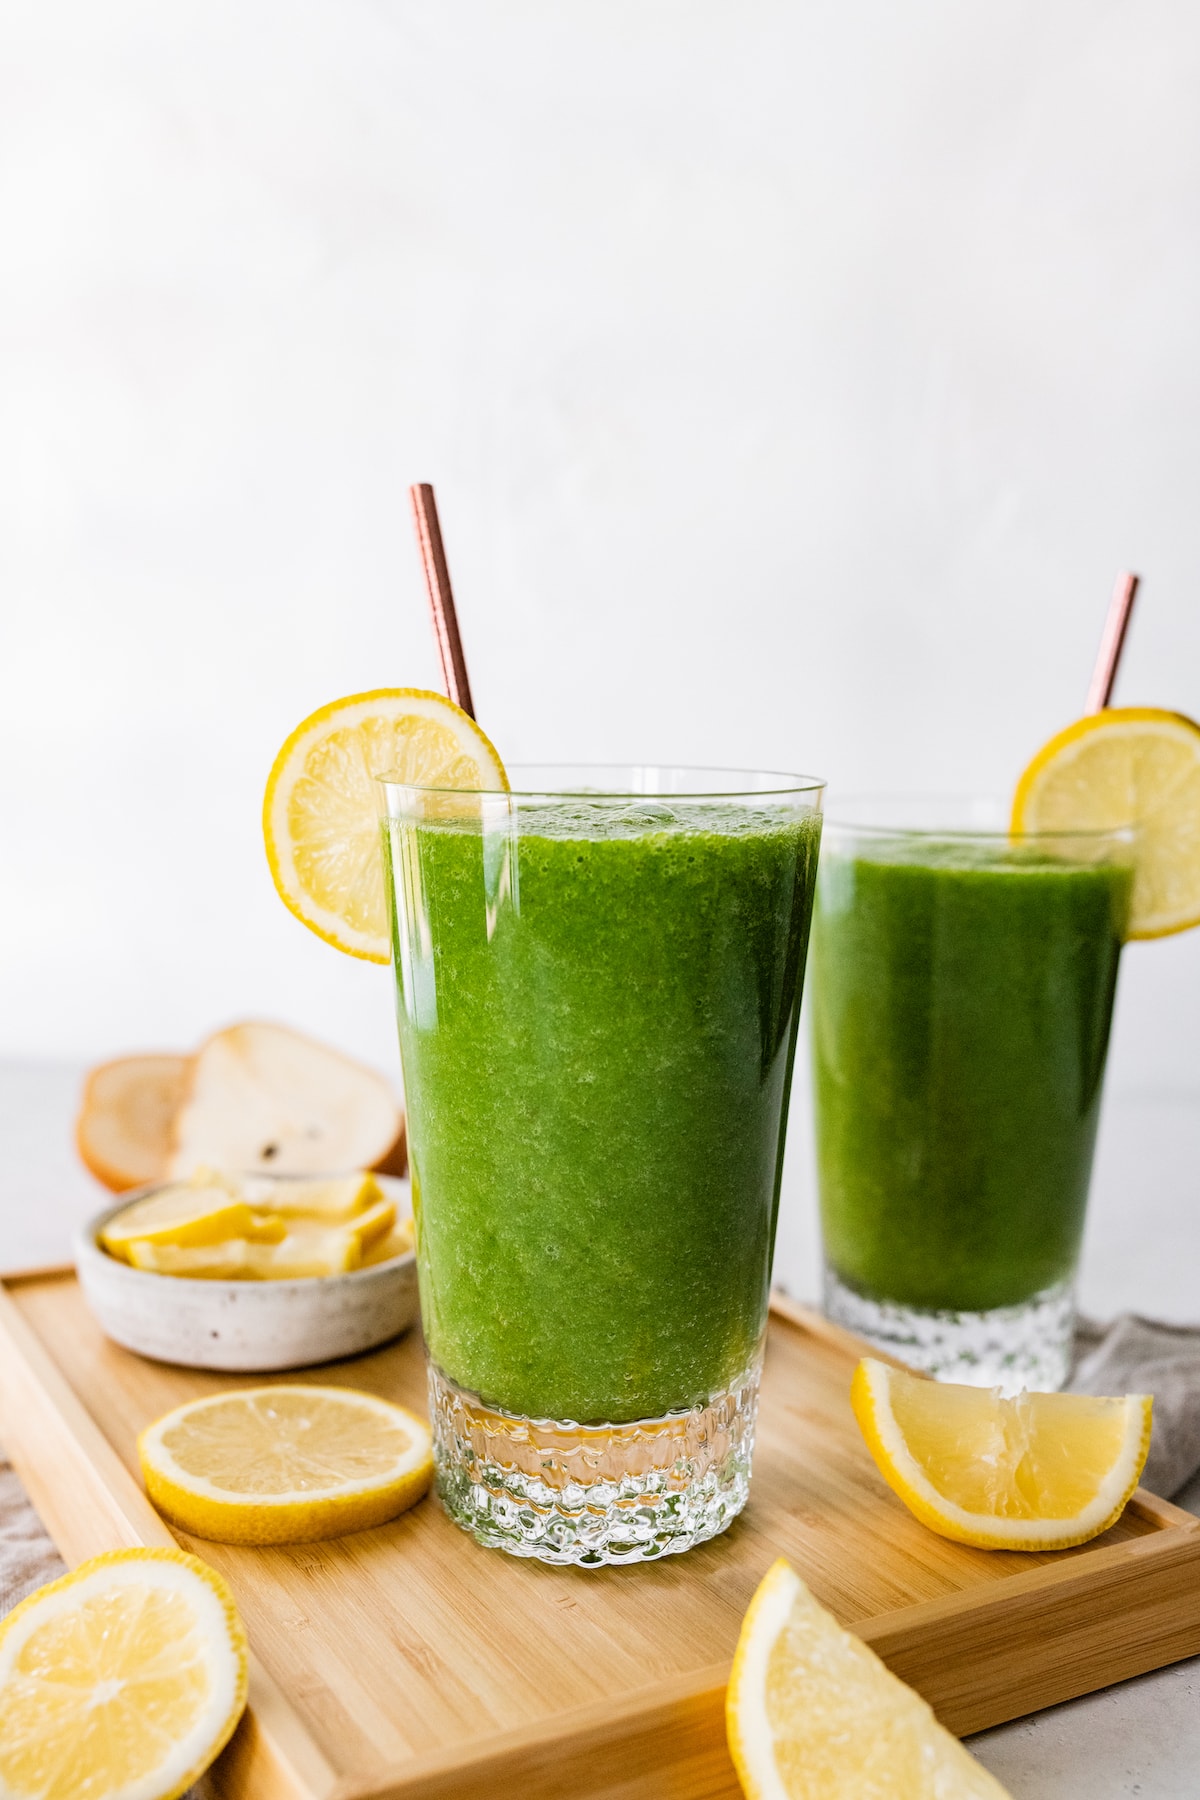 Two green lemonade shakes in glasses with straws and fresh lemon slices.